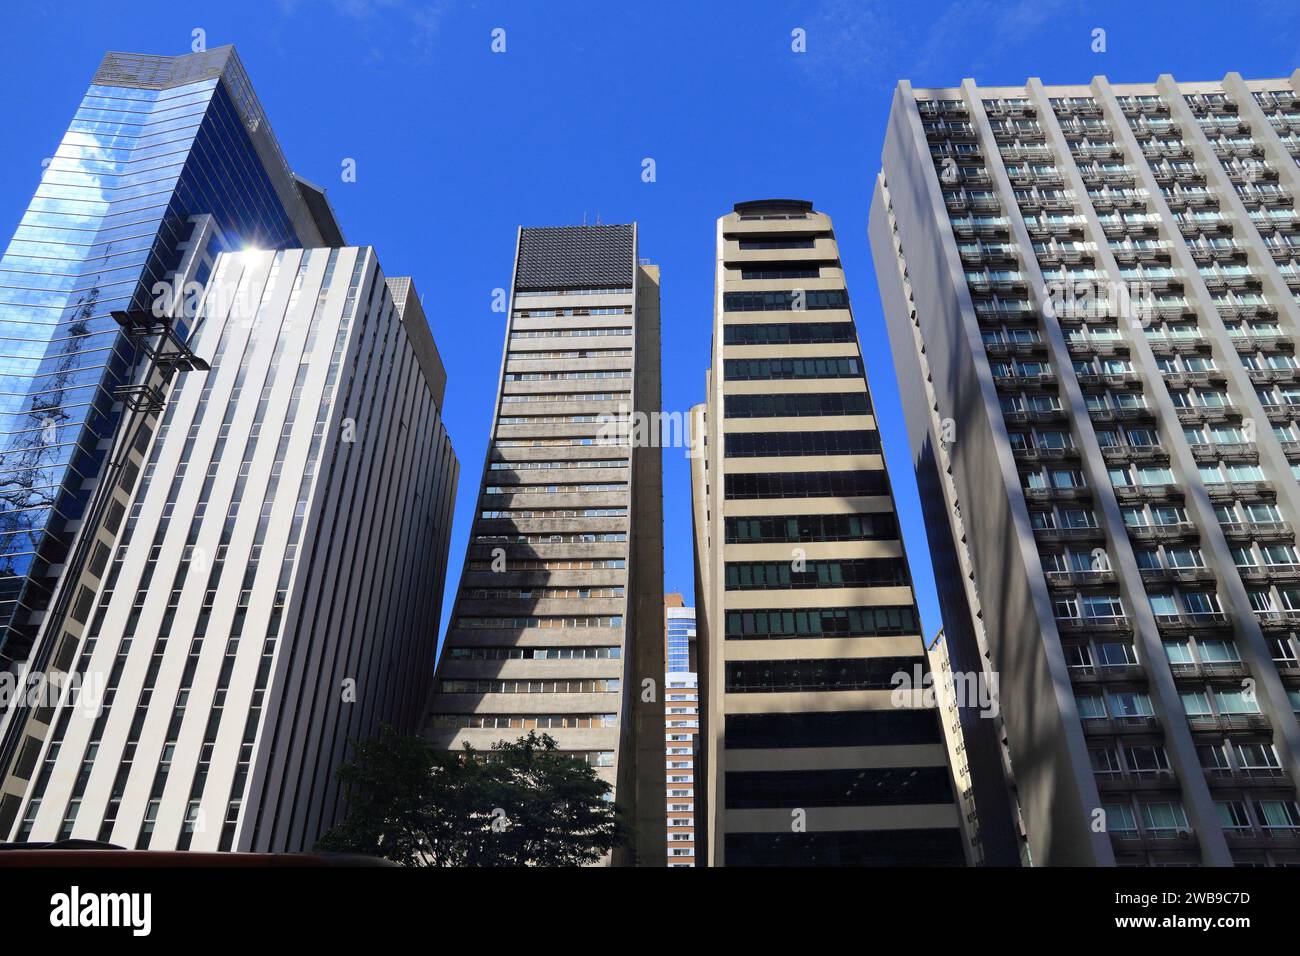 6,191 Avenida Paulista Images, Stock Photos, 3D objects, & Vectors